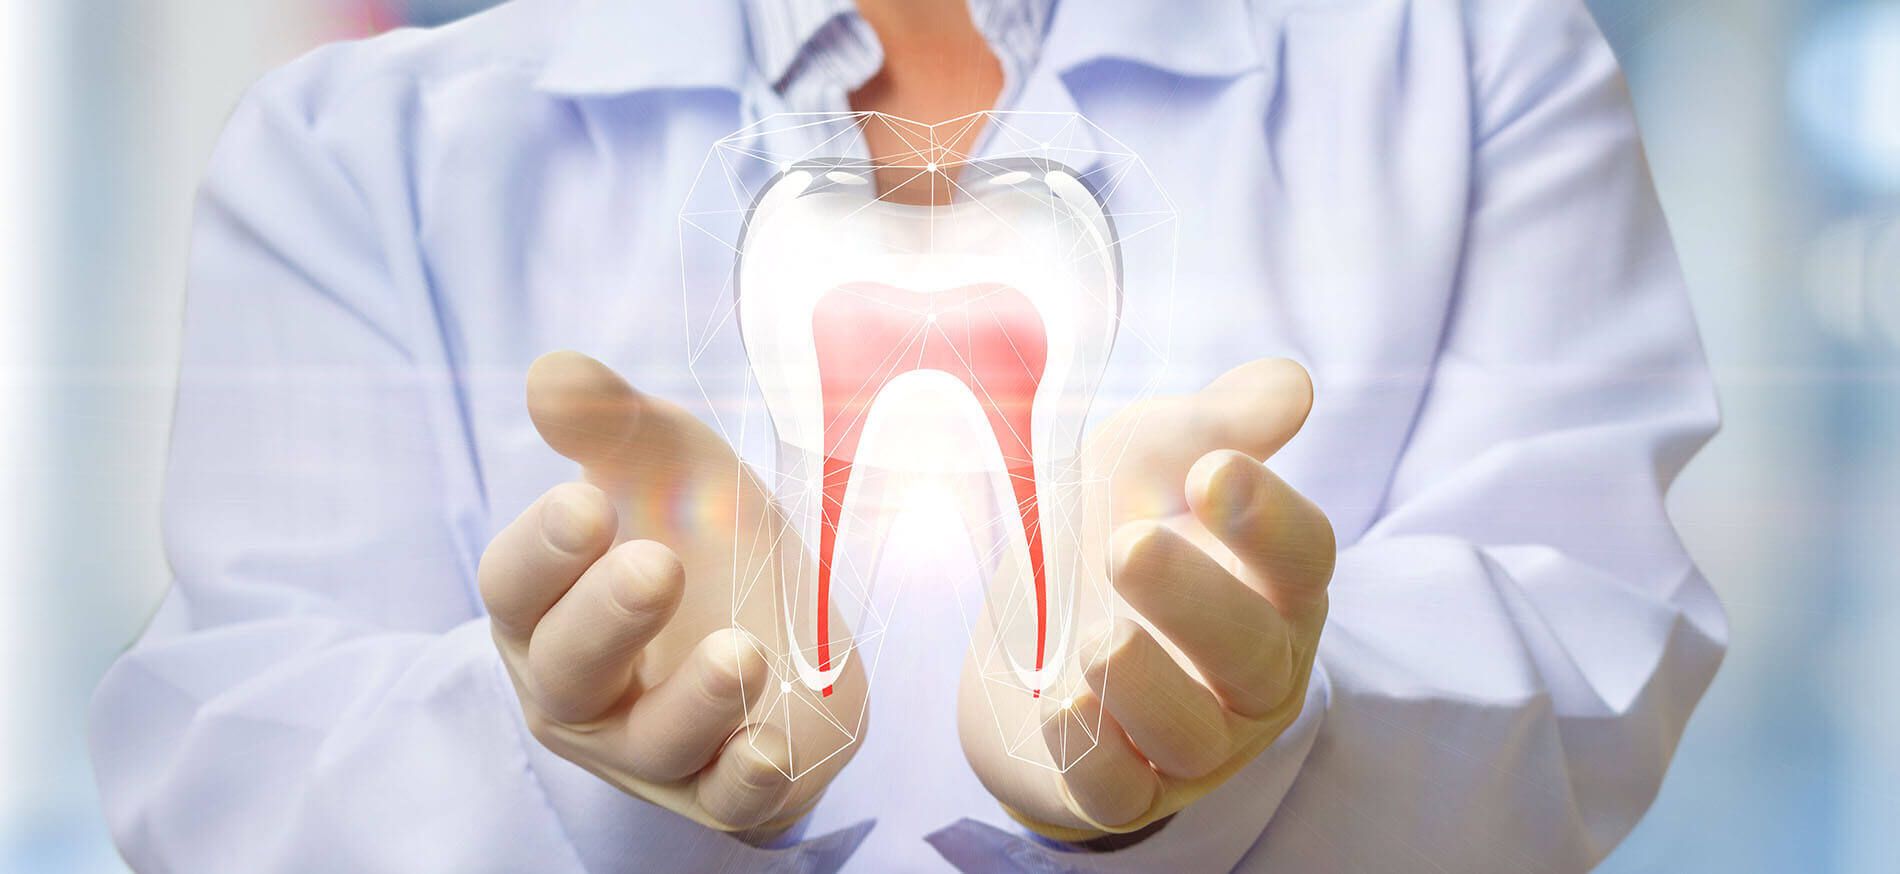 Make A Habit Of Regular Dental Check-ups - AK Global Dent